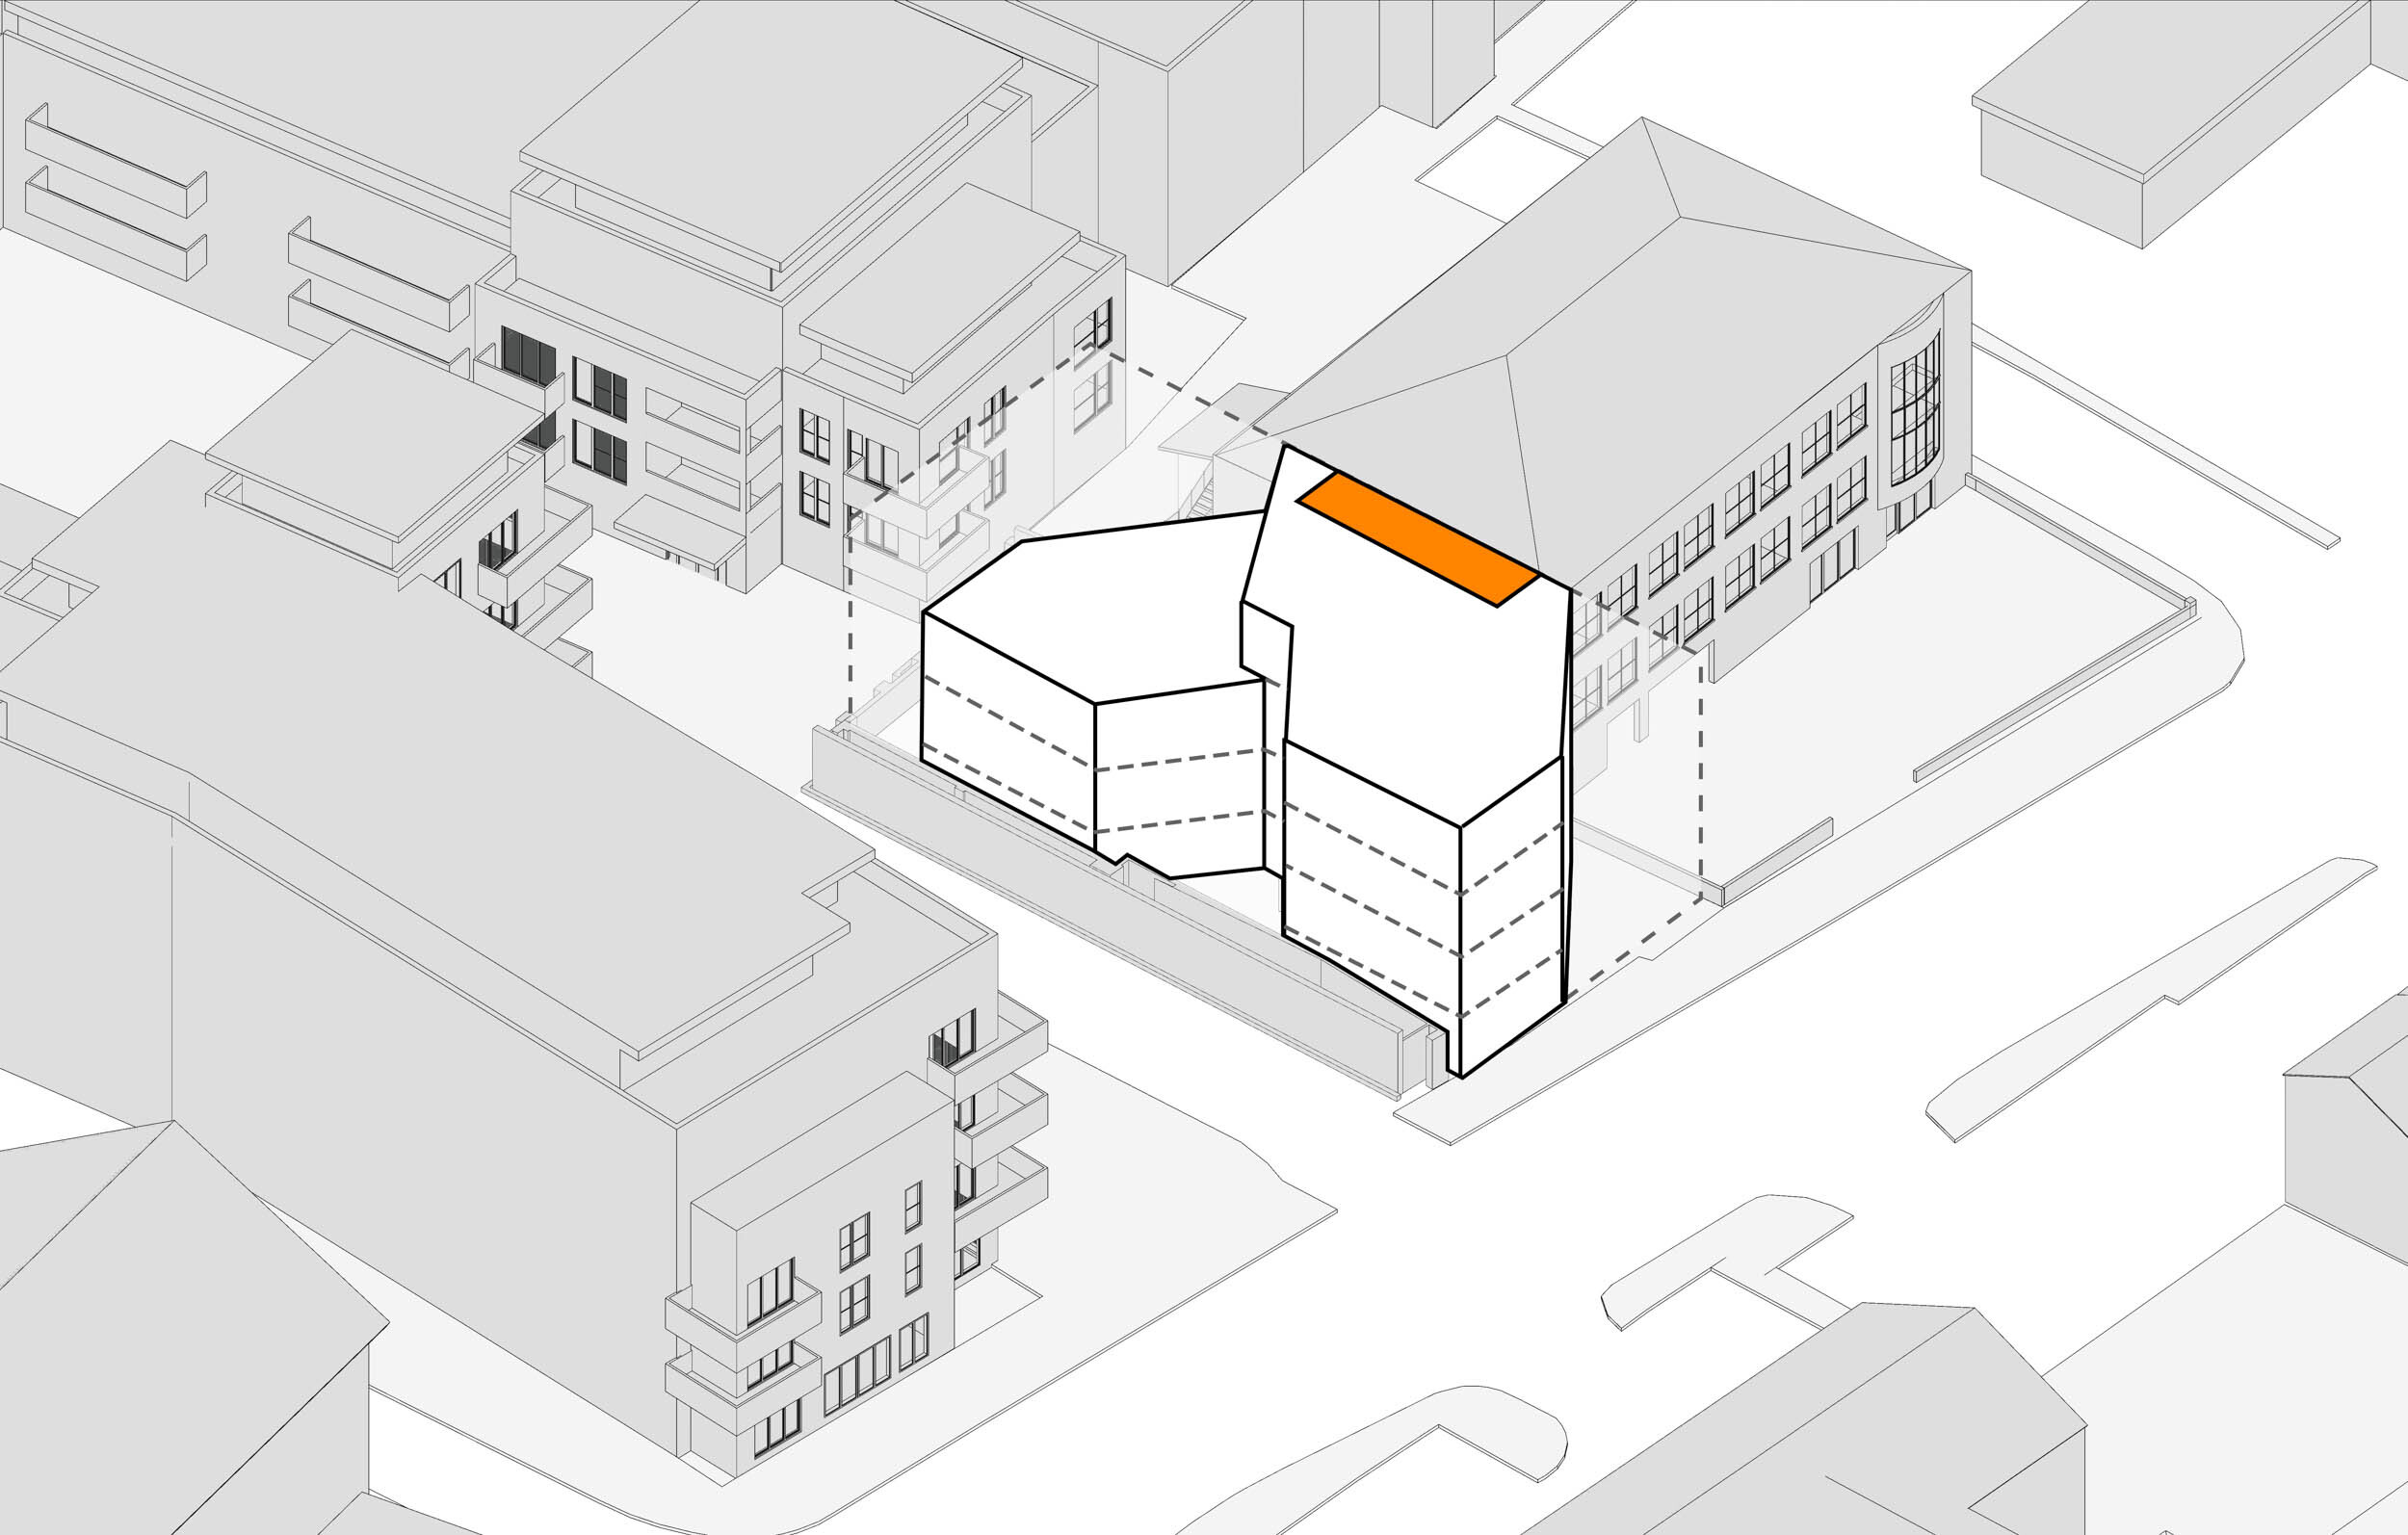 concept showing circulation core location newmarket road |  cambridge architects CDC Studio